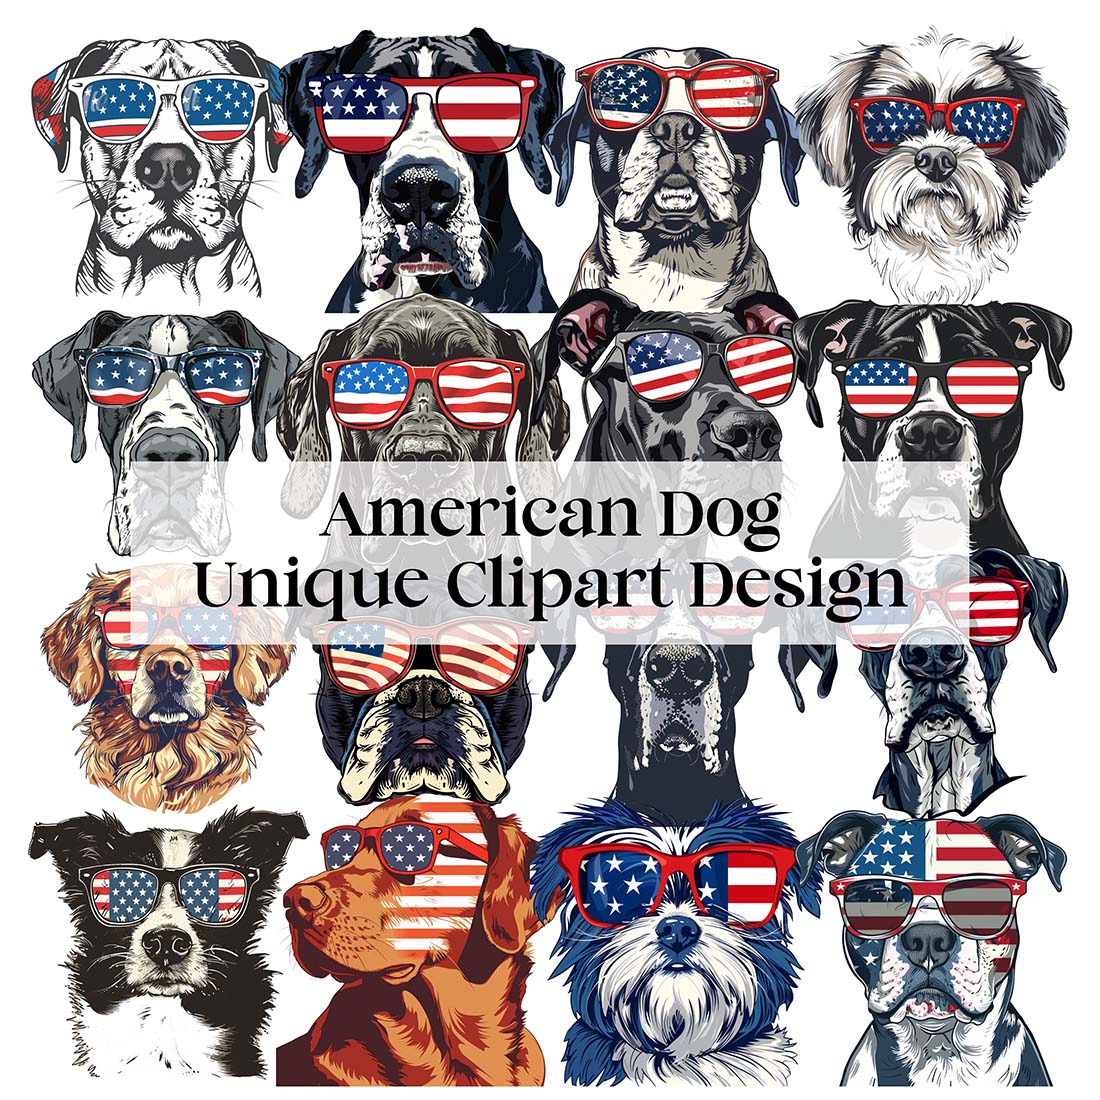 American Dog waring American Sunglasses Unique Design cover image.